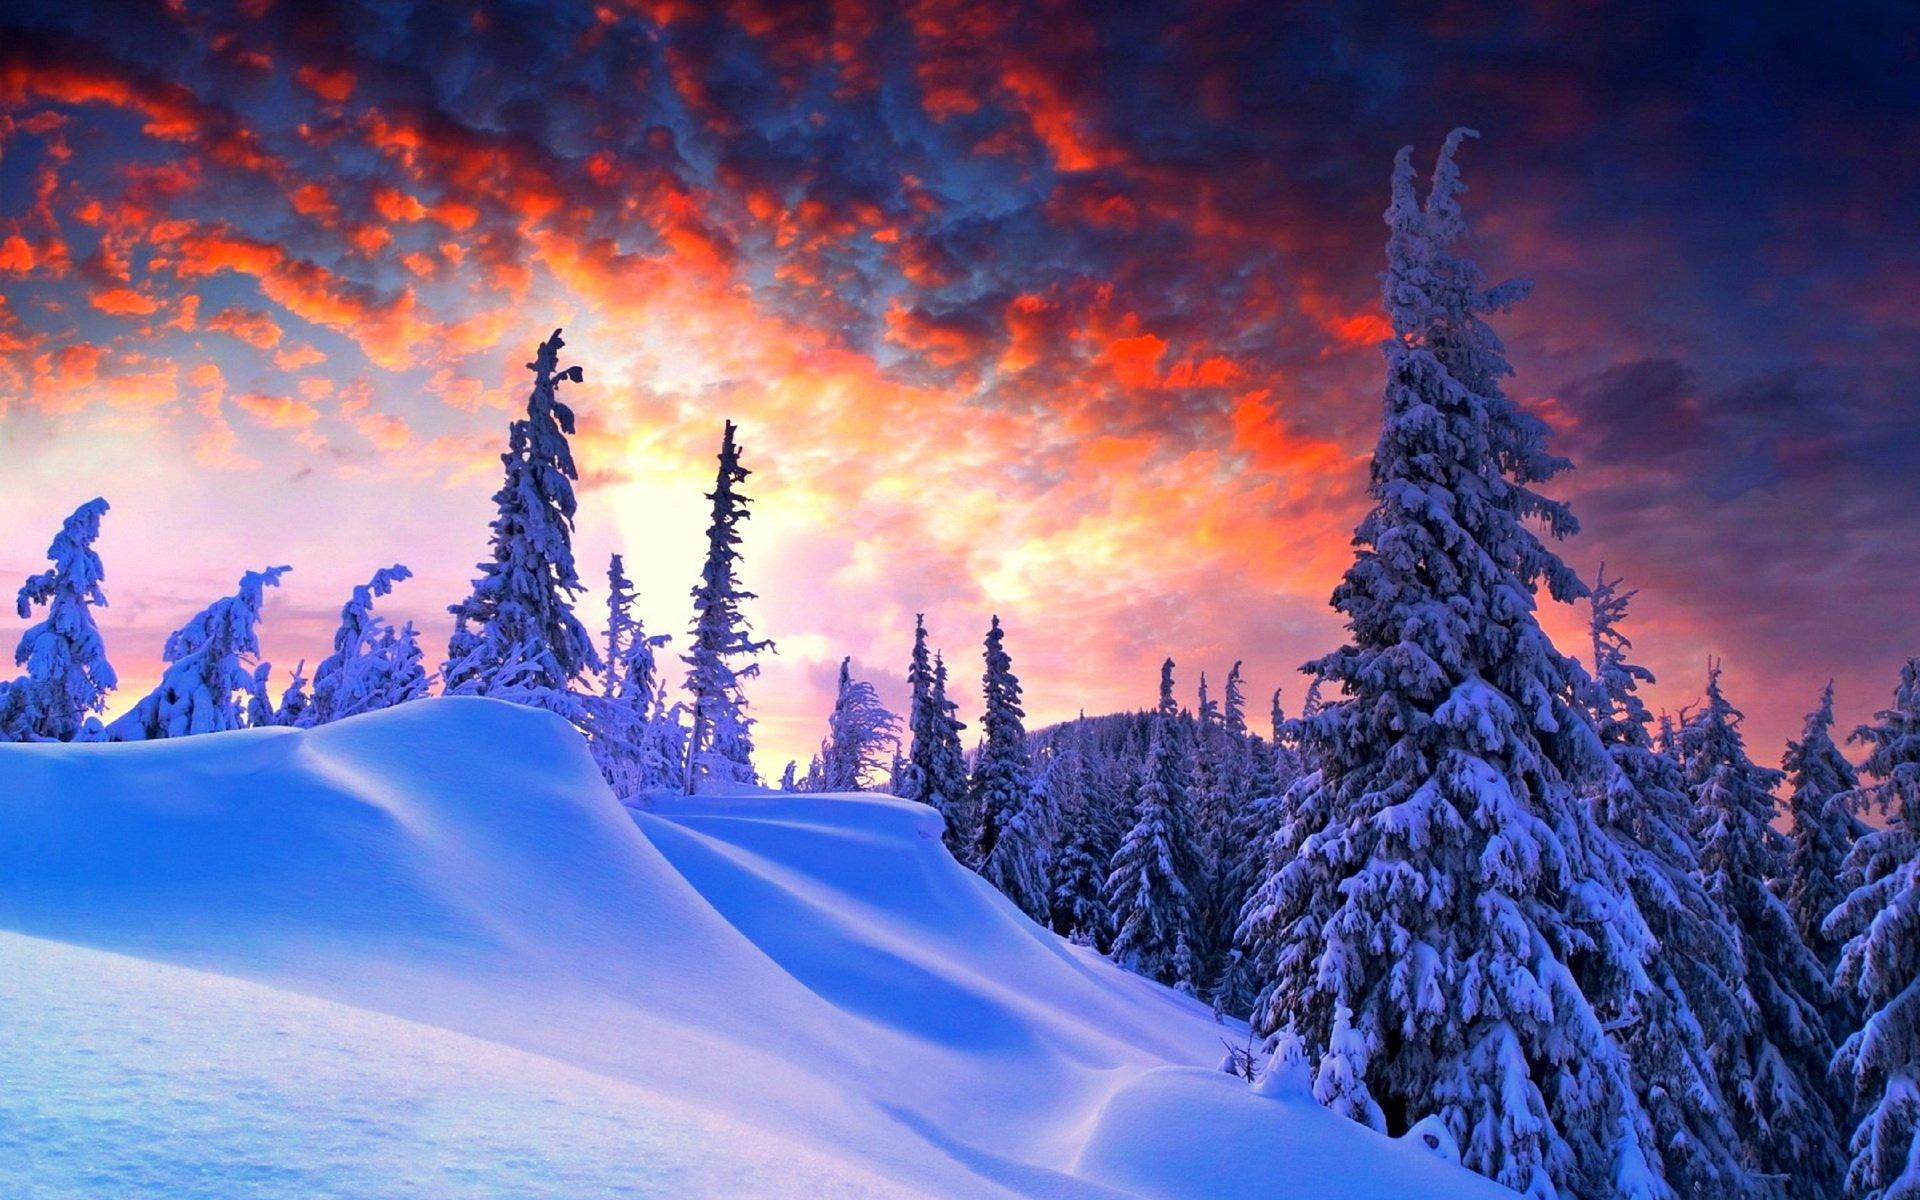 Природа зима обои на рабочий стол - фото и картинки: 66 штук